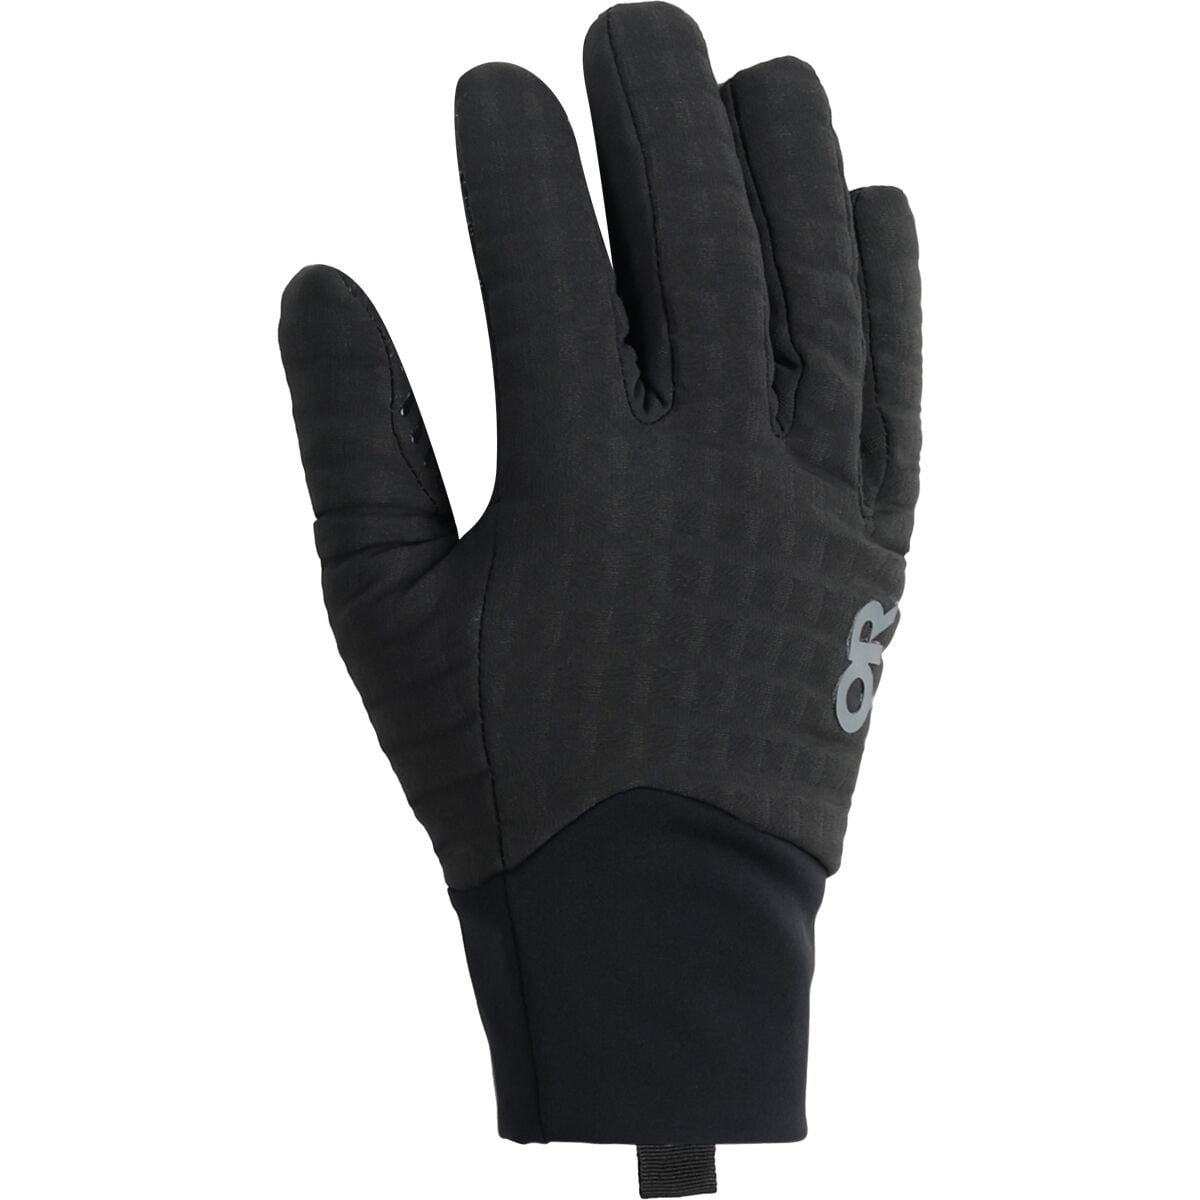 Outdoor Research Vigor Heavyweight Sensor Glove - Men's Black